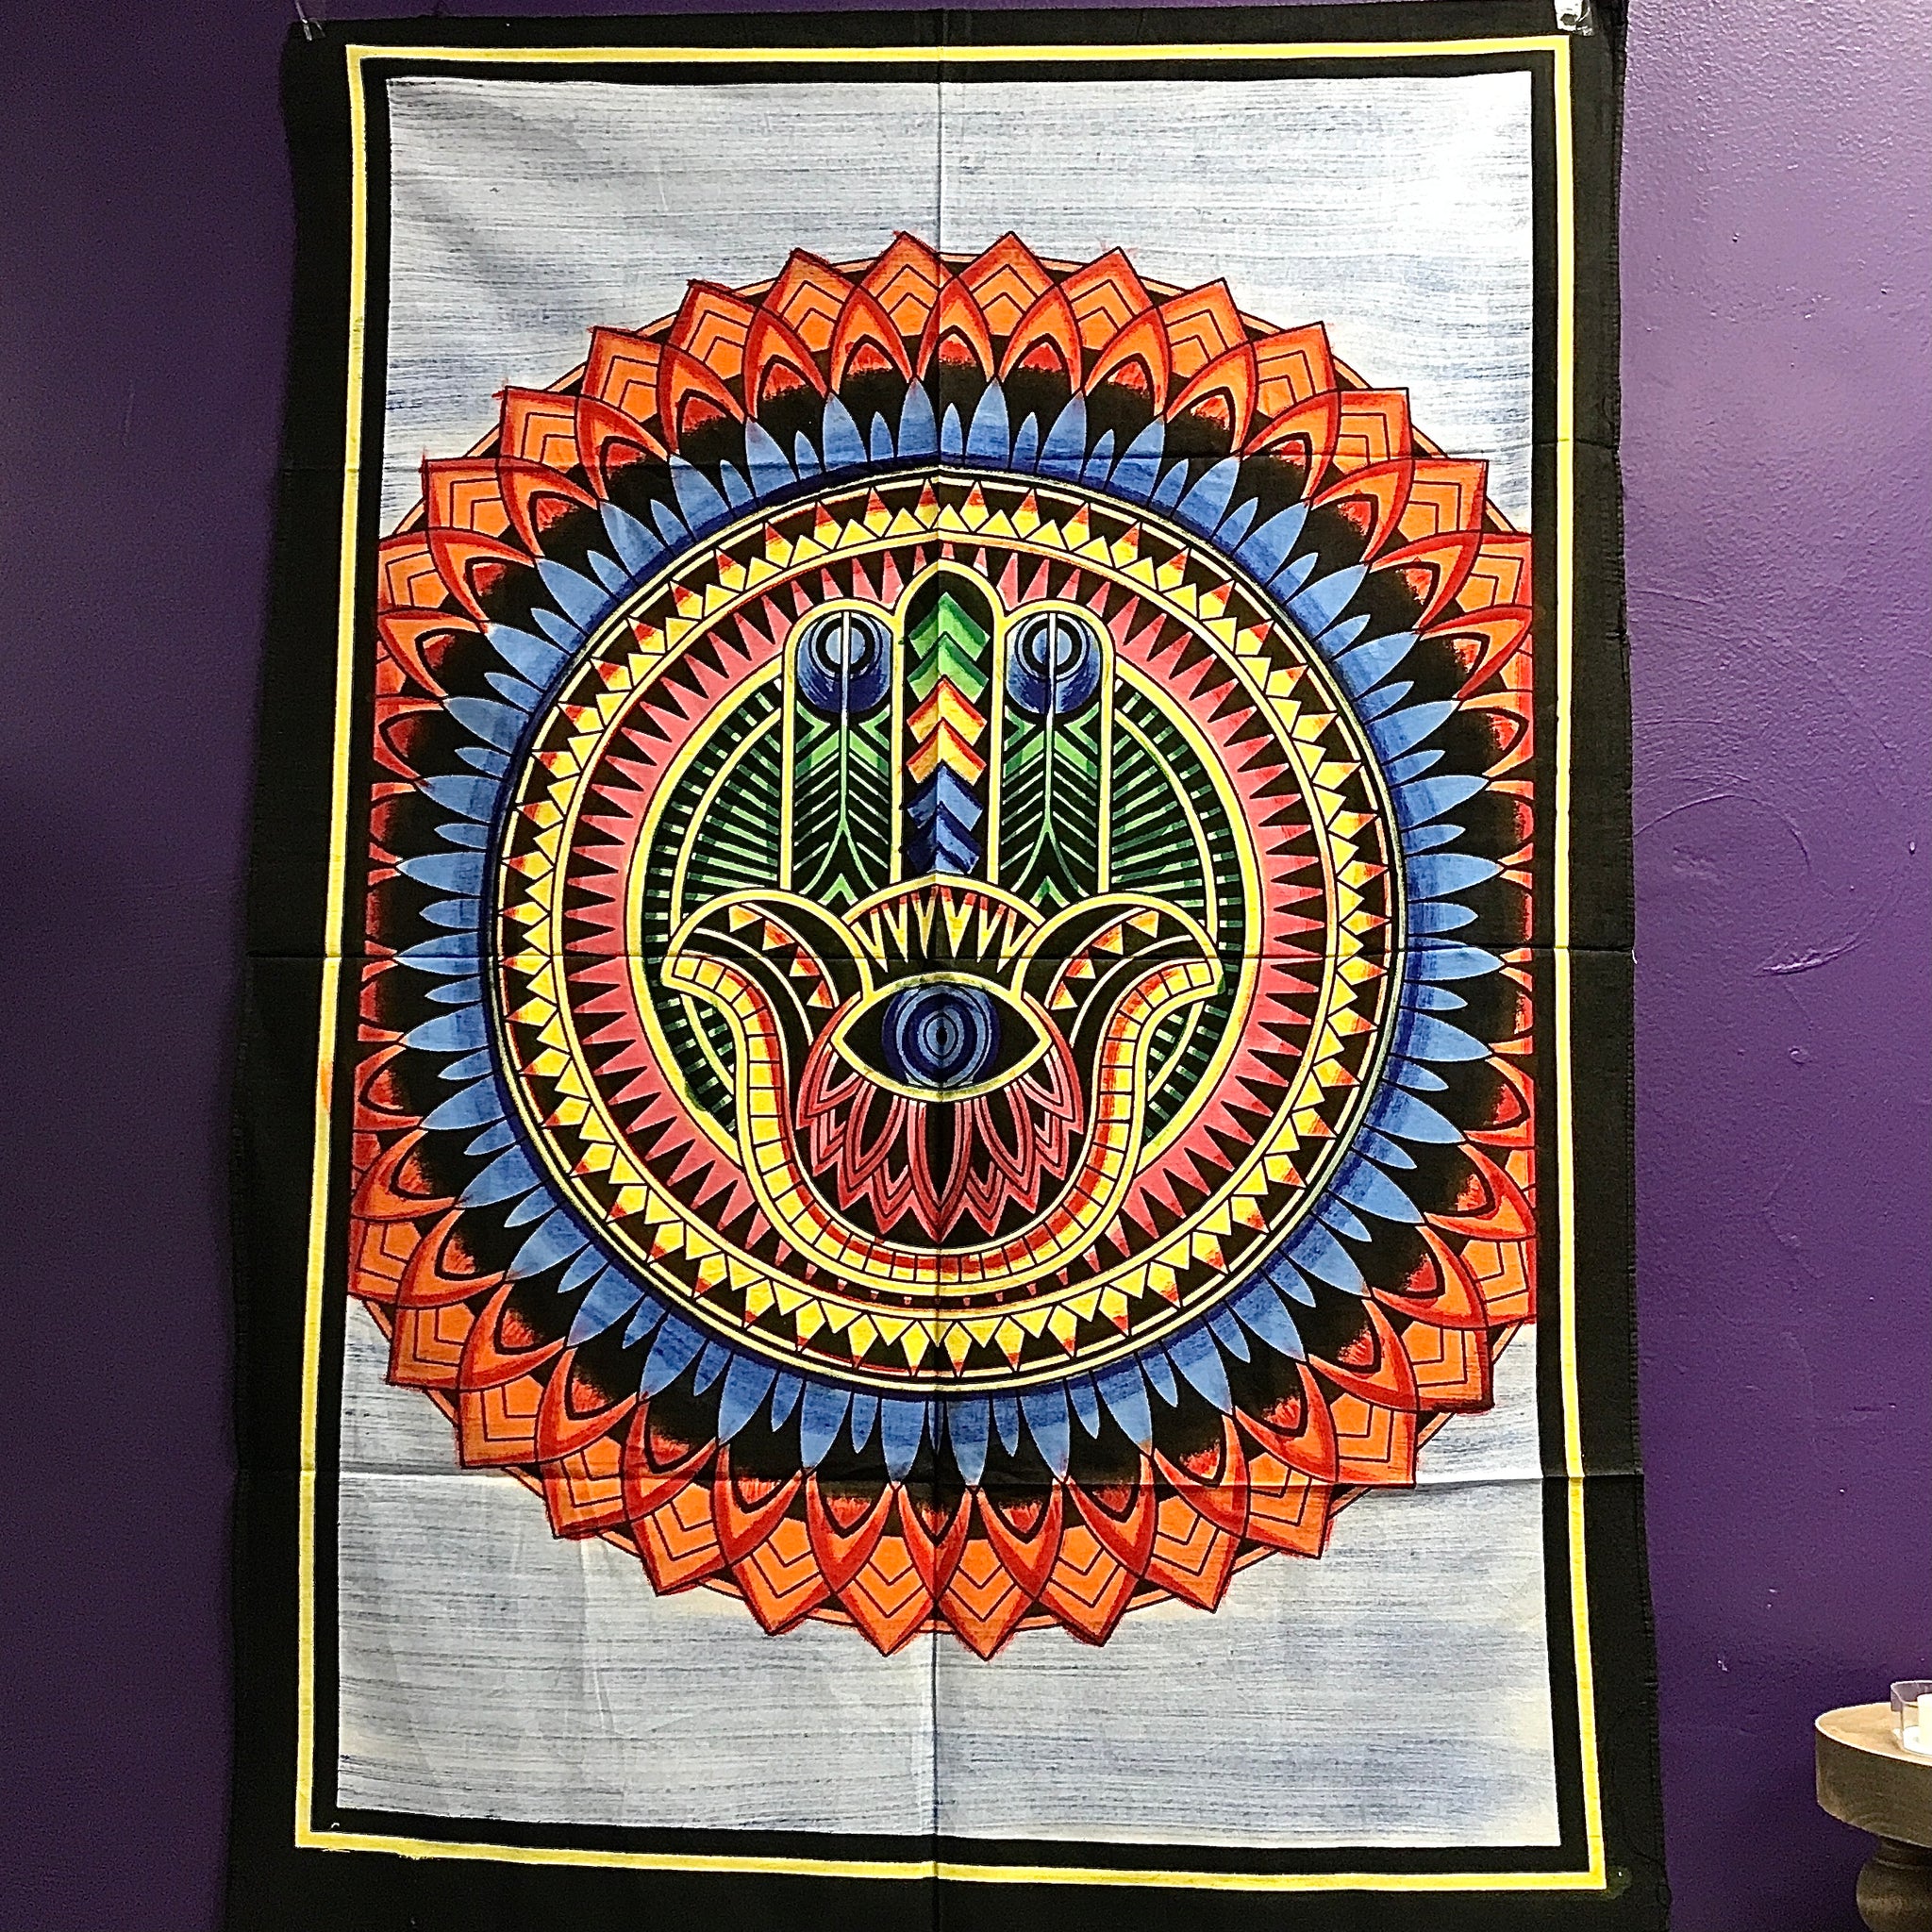 Tapestries - In Assorted Spiritual Designs